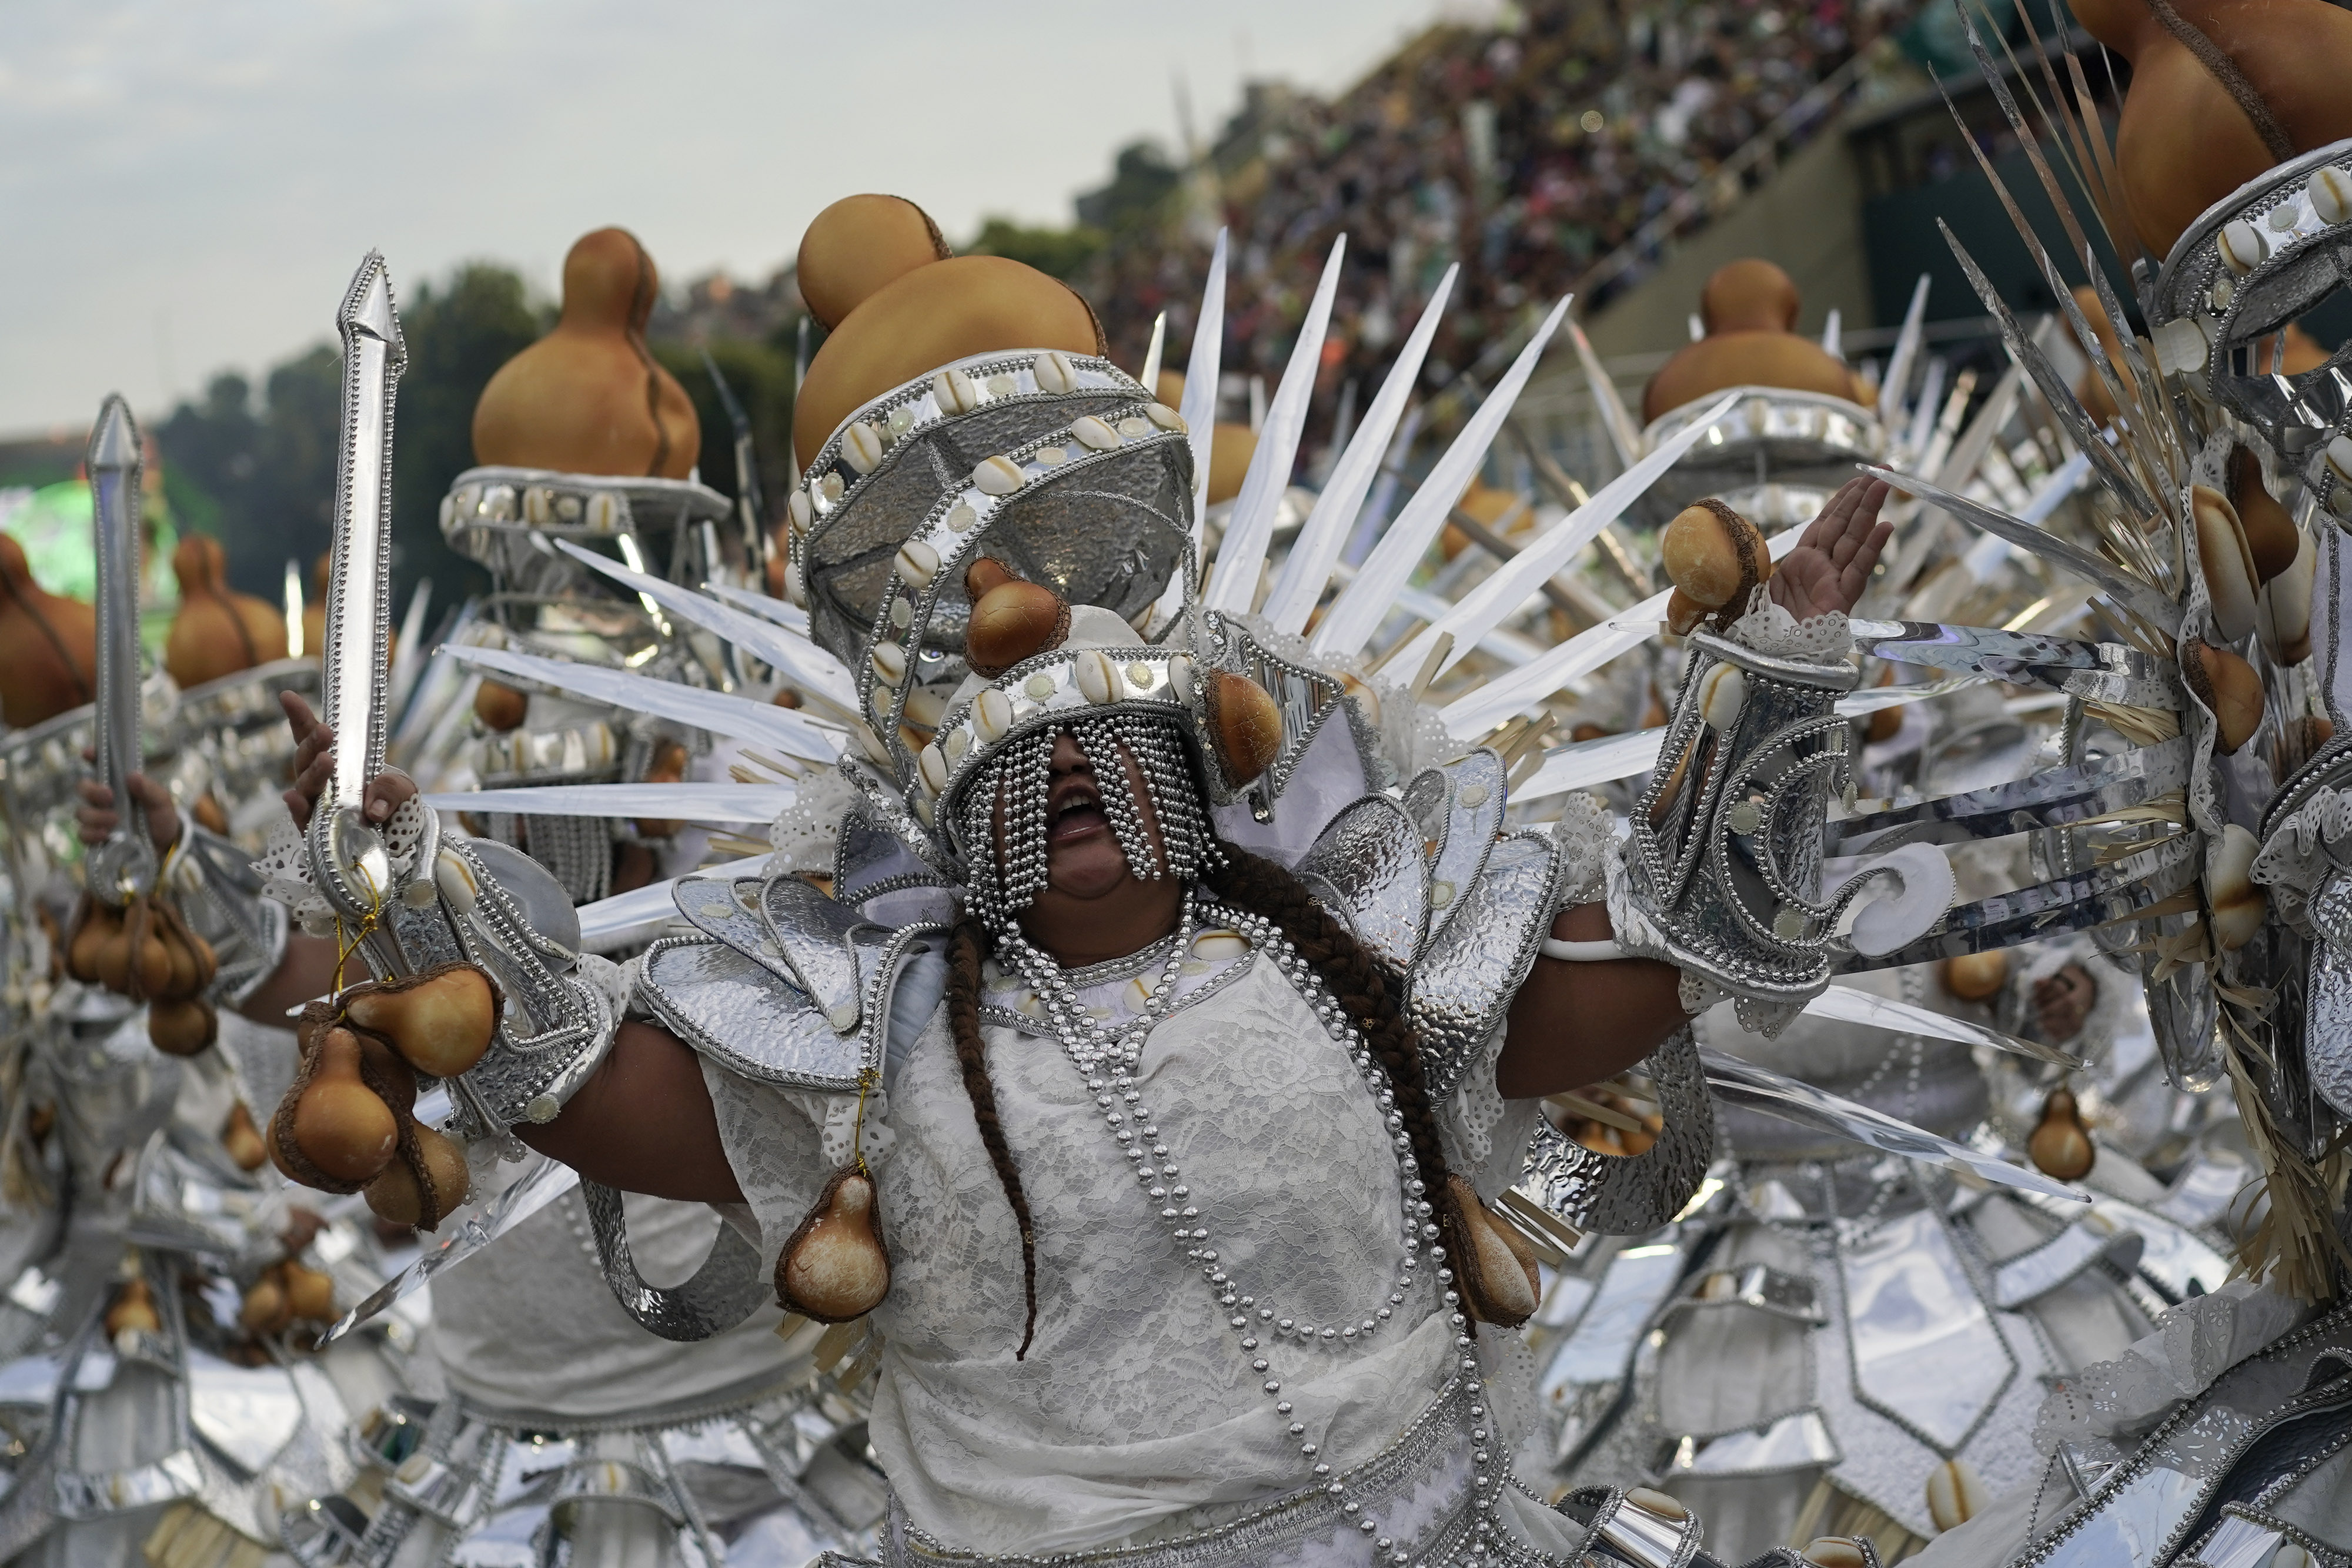 A performer from the Mocidade samba school parades during Carnival celebrations at the Sambadrome in Rio de Janeiro, Brazil, Tuesday, March 5, 2019. (AP Photo/Leo Correa)